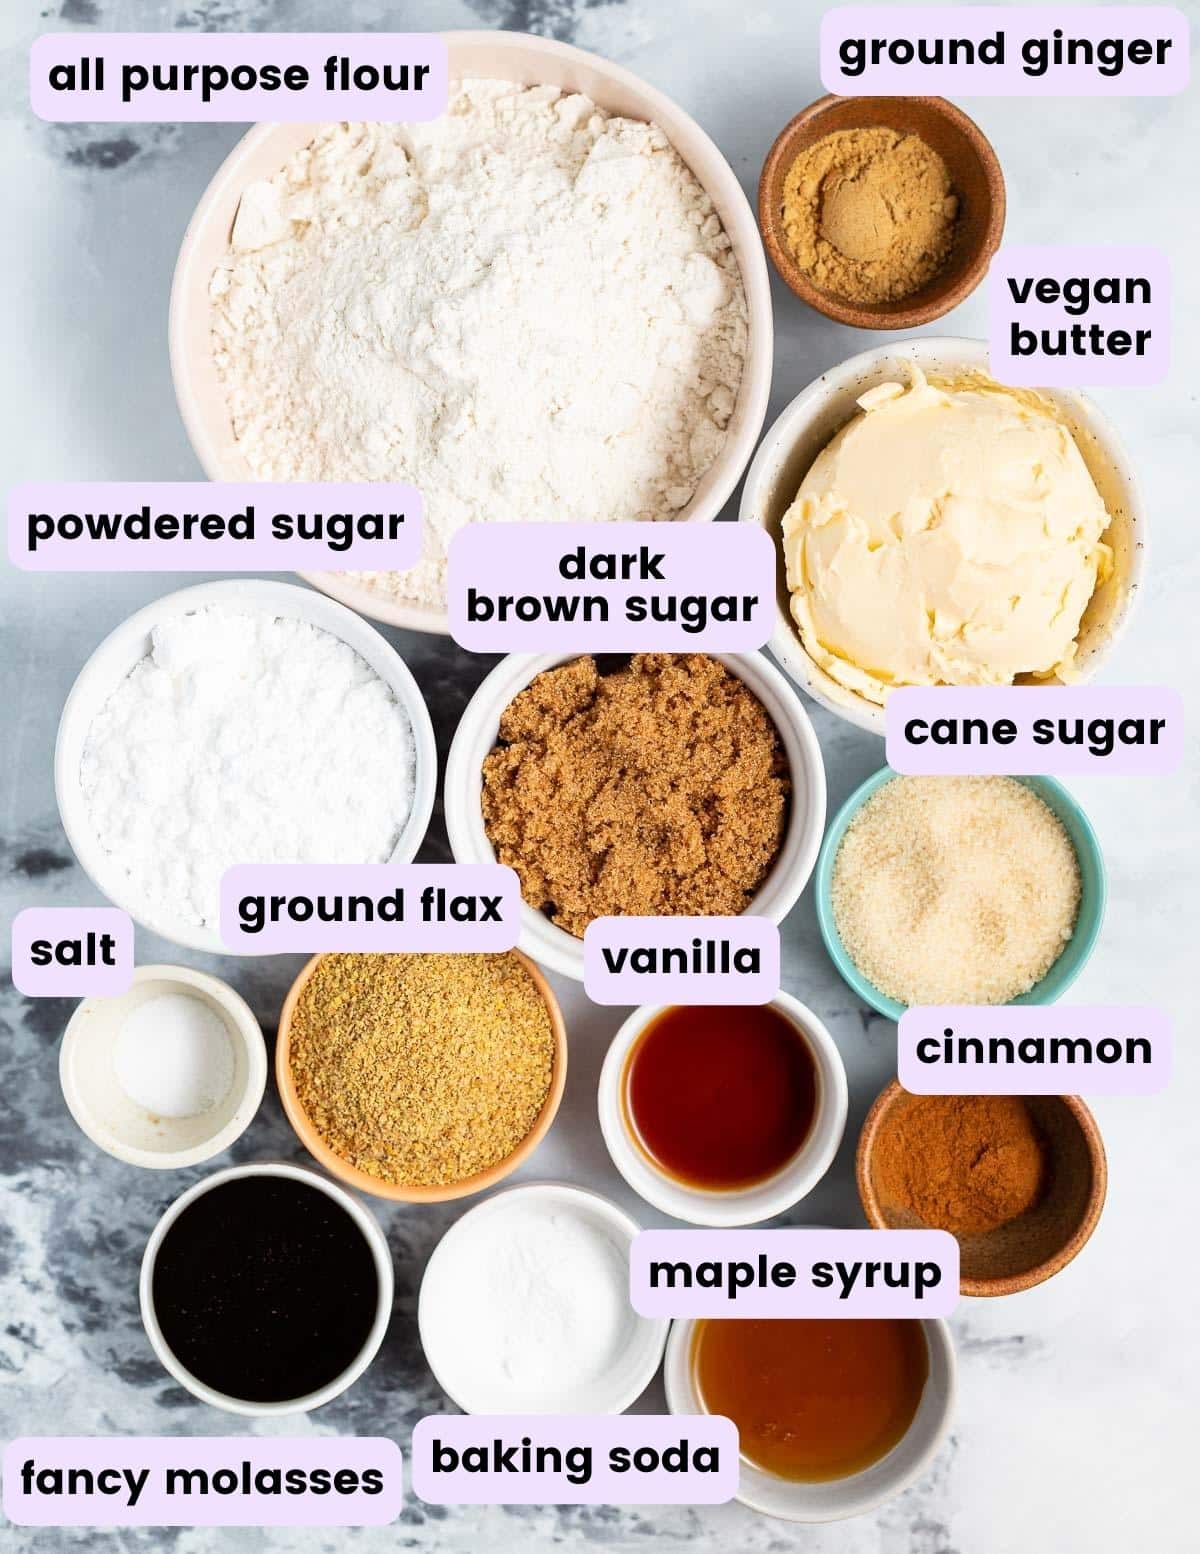 ingredients needed to make vegan ginger cookies (as per the written ingredient list)